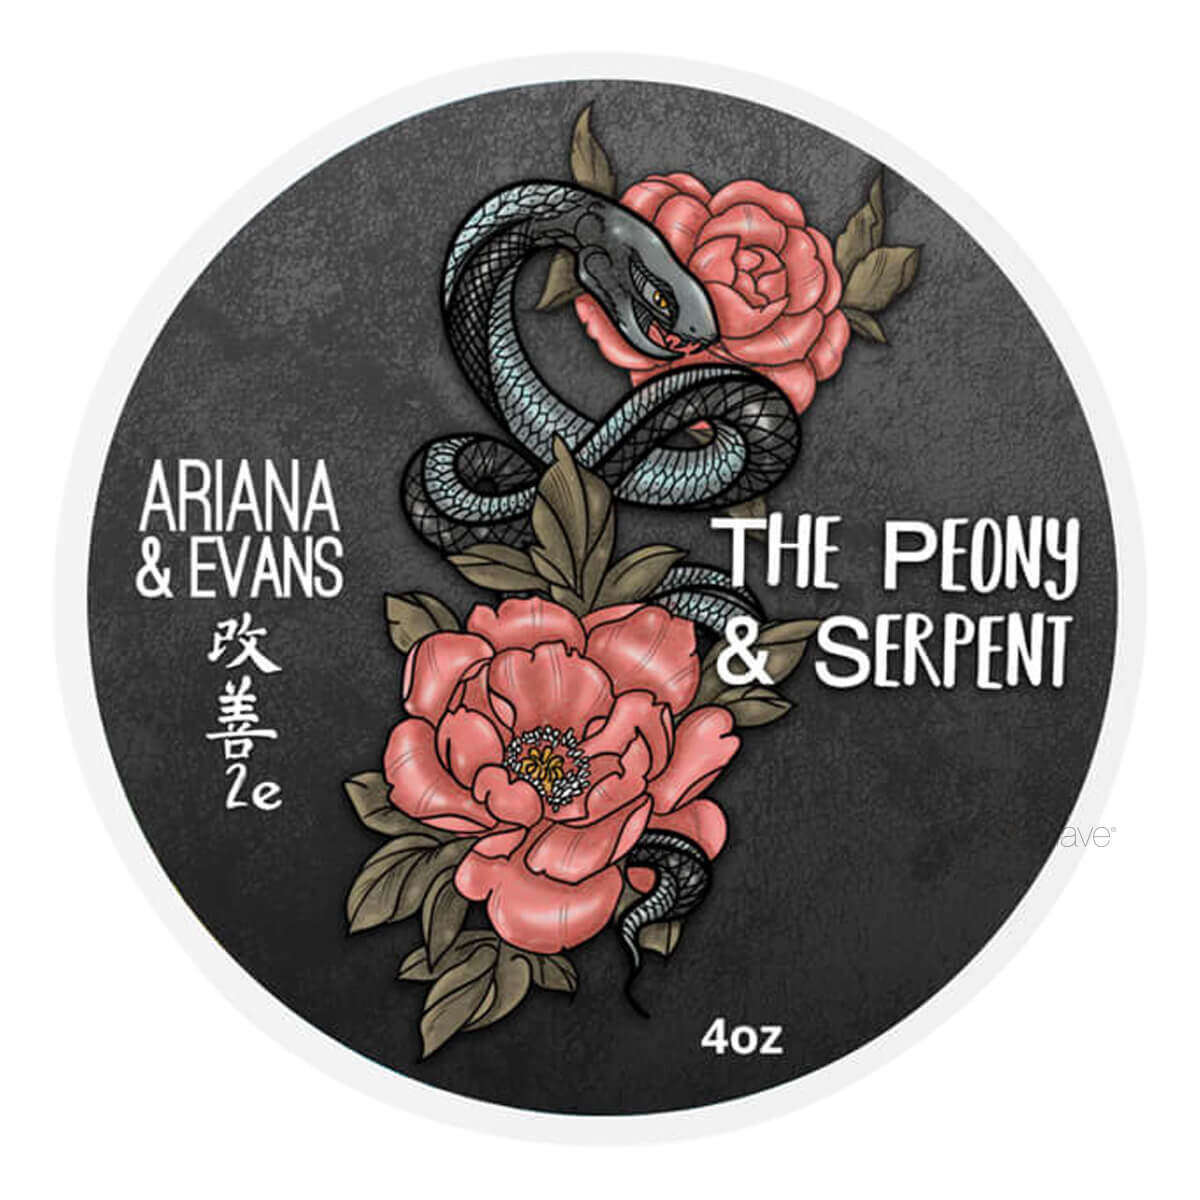 Se Ariana & Evans Barbersæbe, The Serpent & Peony, 118 ml. hos Proshave